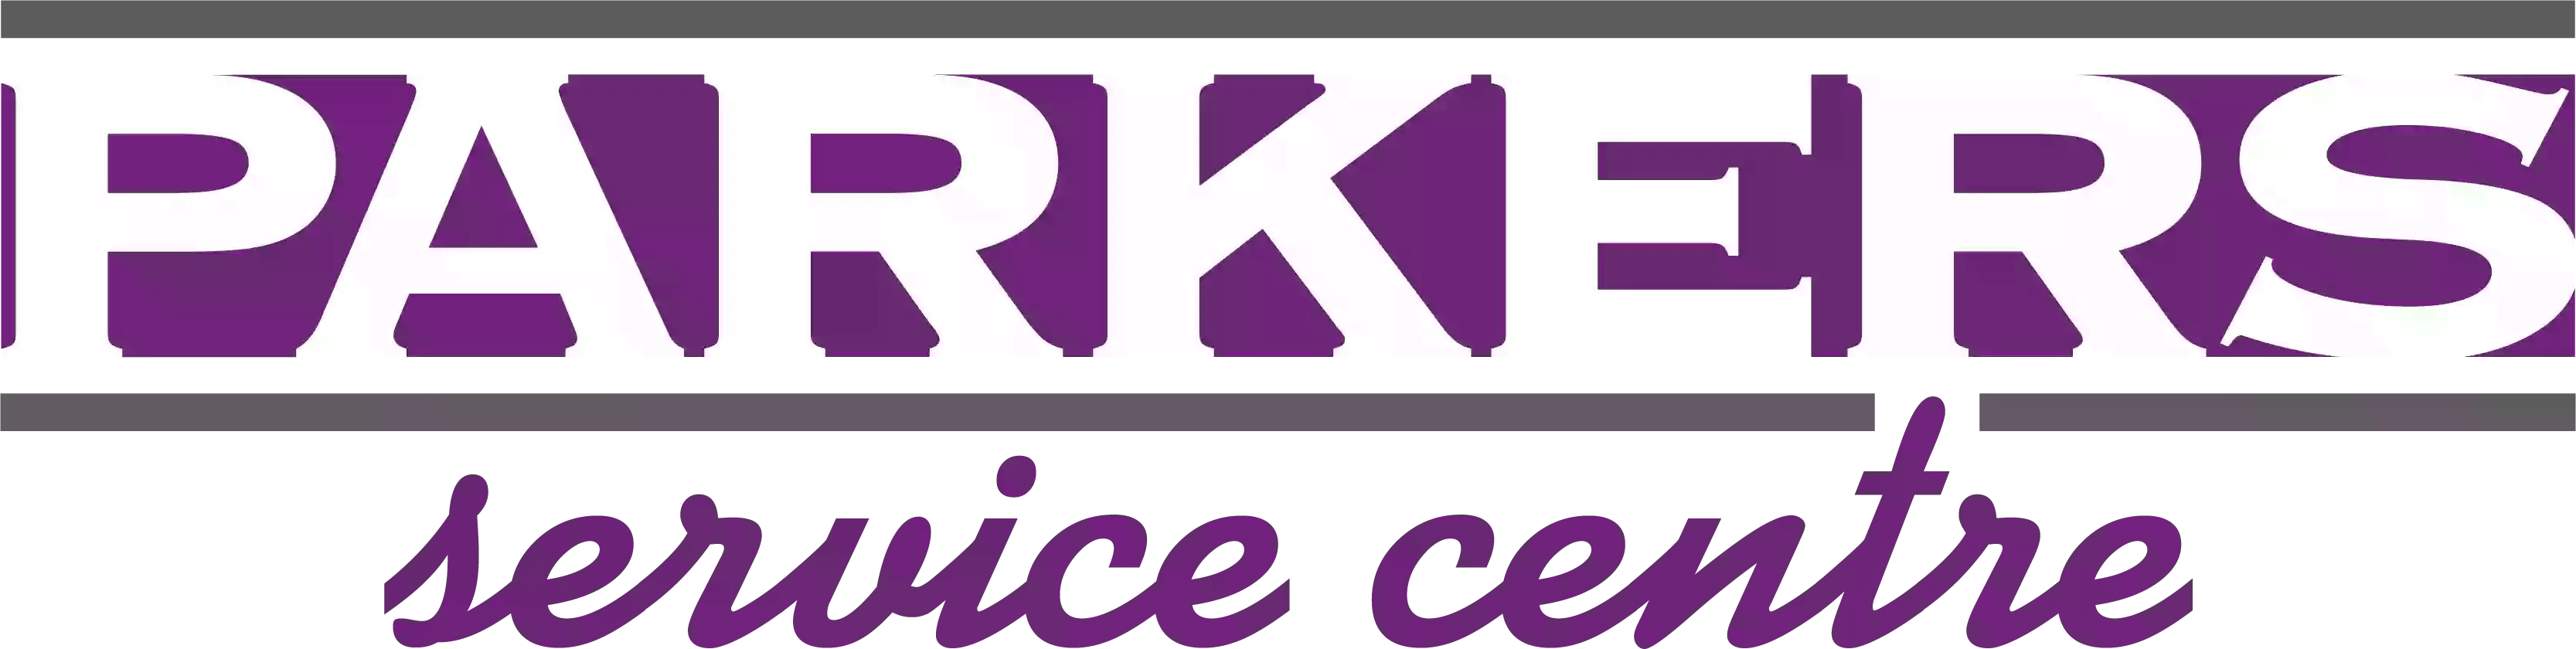 Parkers Garage Services